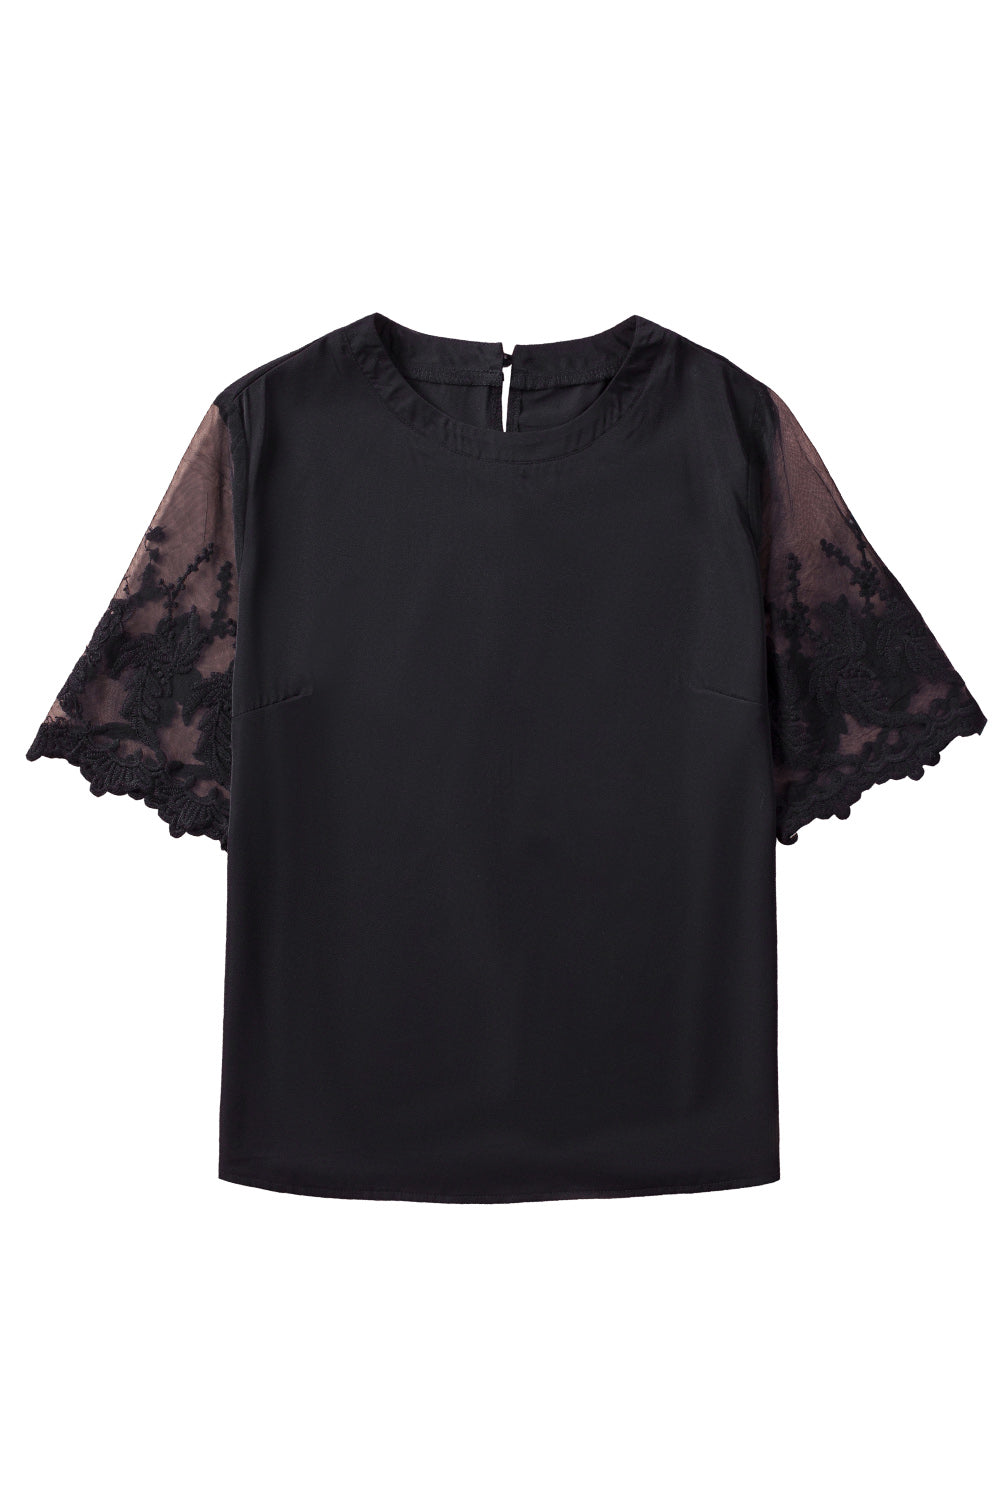 Black Sheer Flower Lace Short Sleeve Summer Top